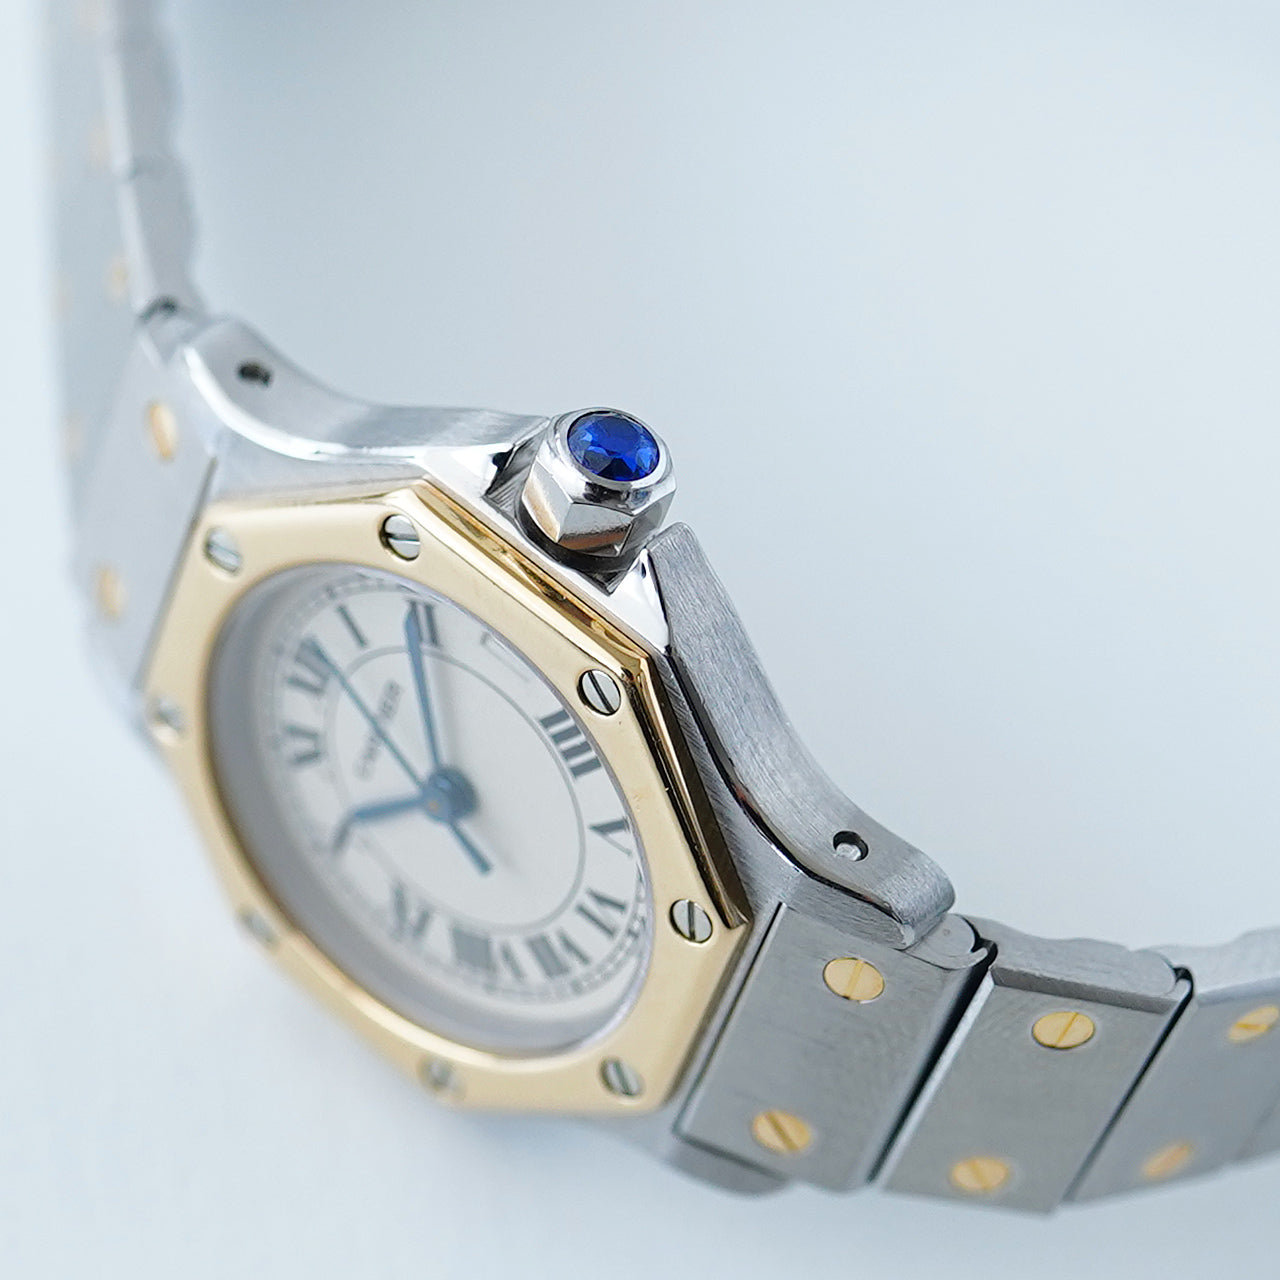 Cartier カルティエ サントスオクタゴン SANTOS OCTAGON SM 1990年代製 アンティーク腕時計 5281 【送料無料】